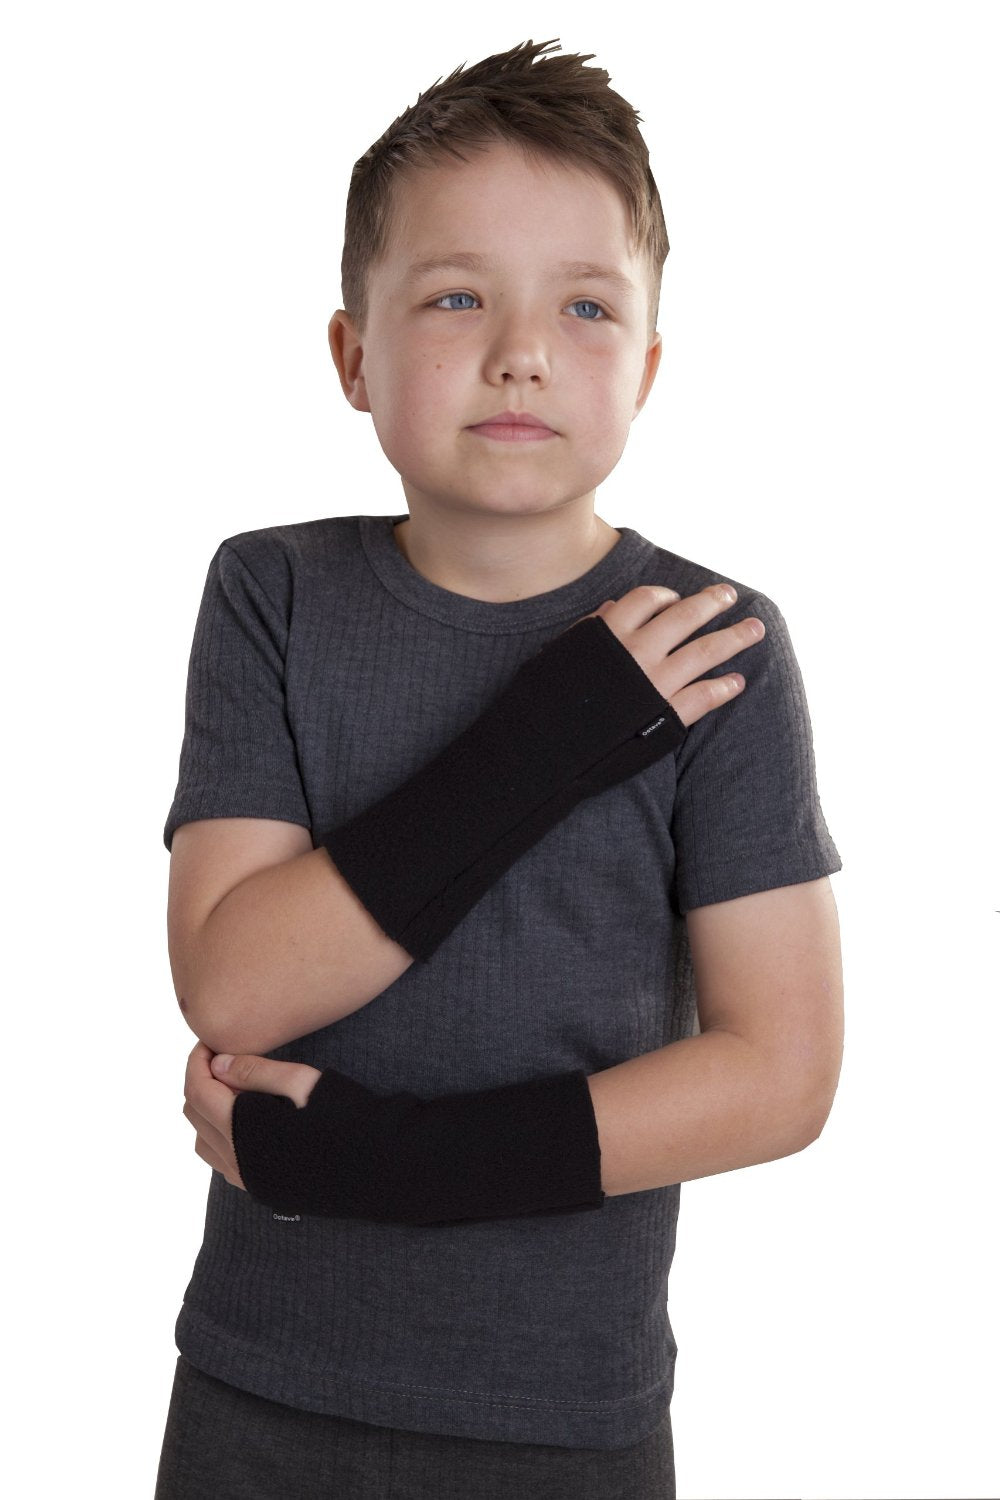 OCTAVE Toddlers Fingerless Gloves : Wrist Warmers Fingerless Gloves